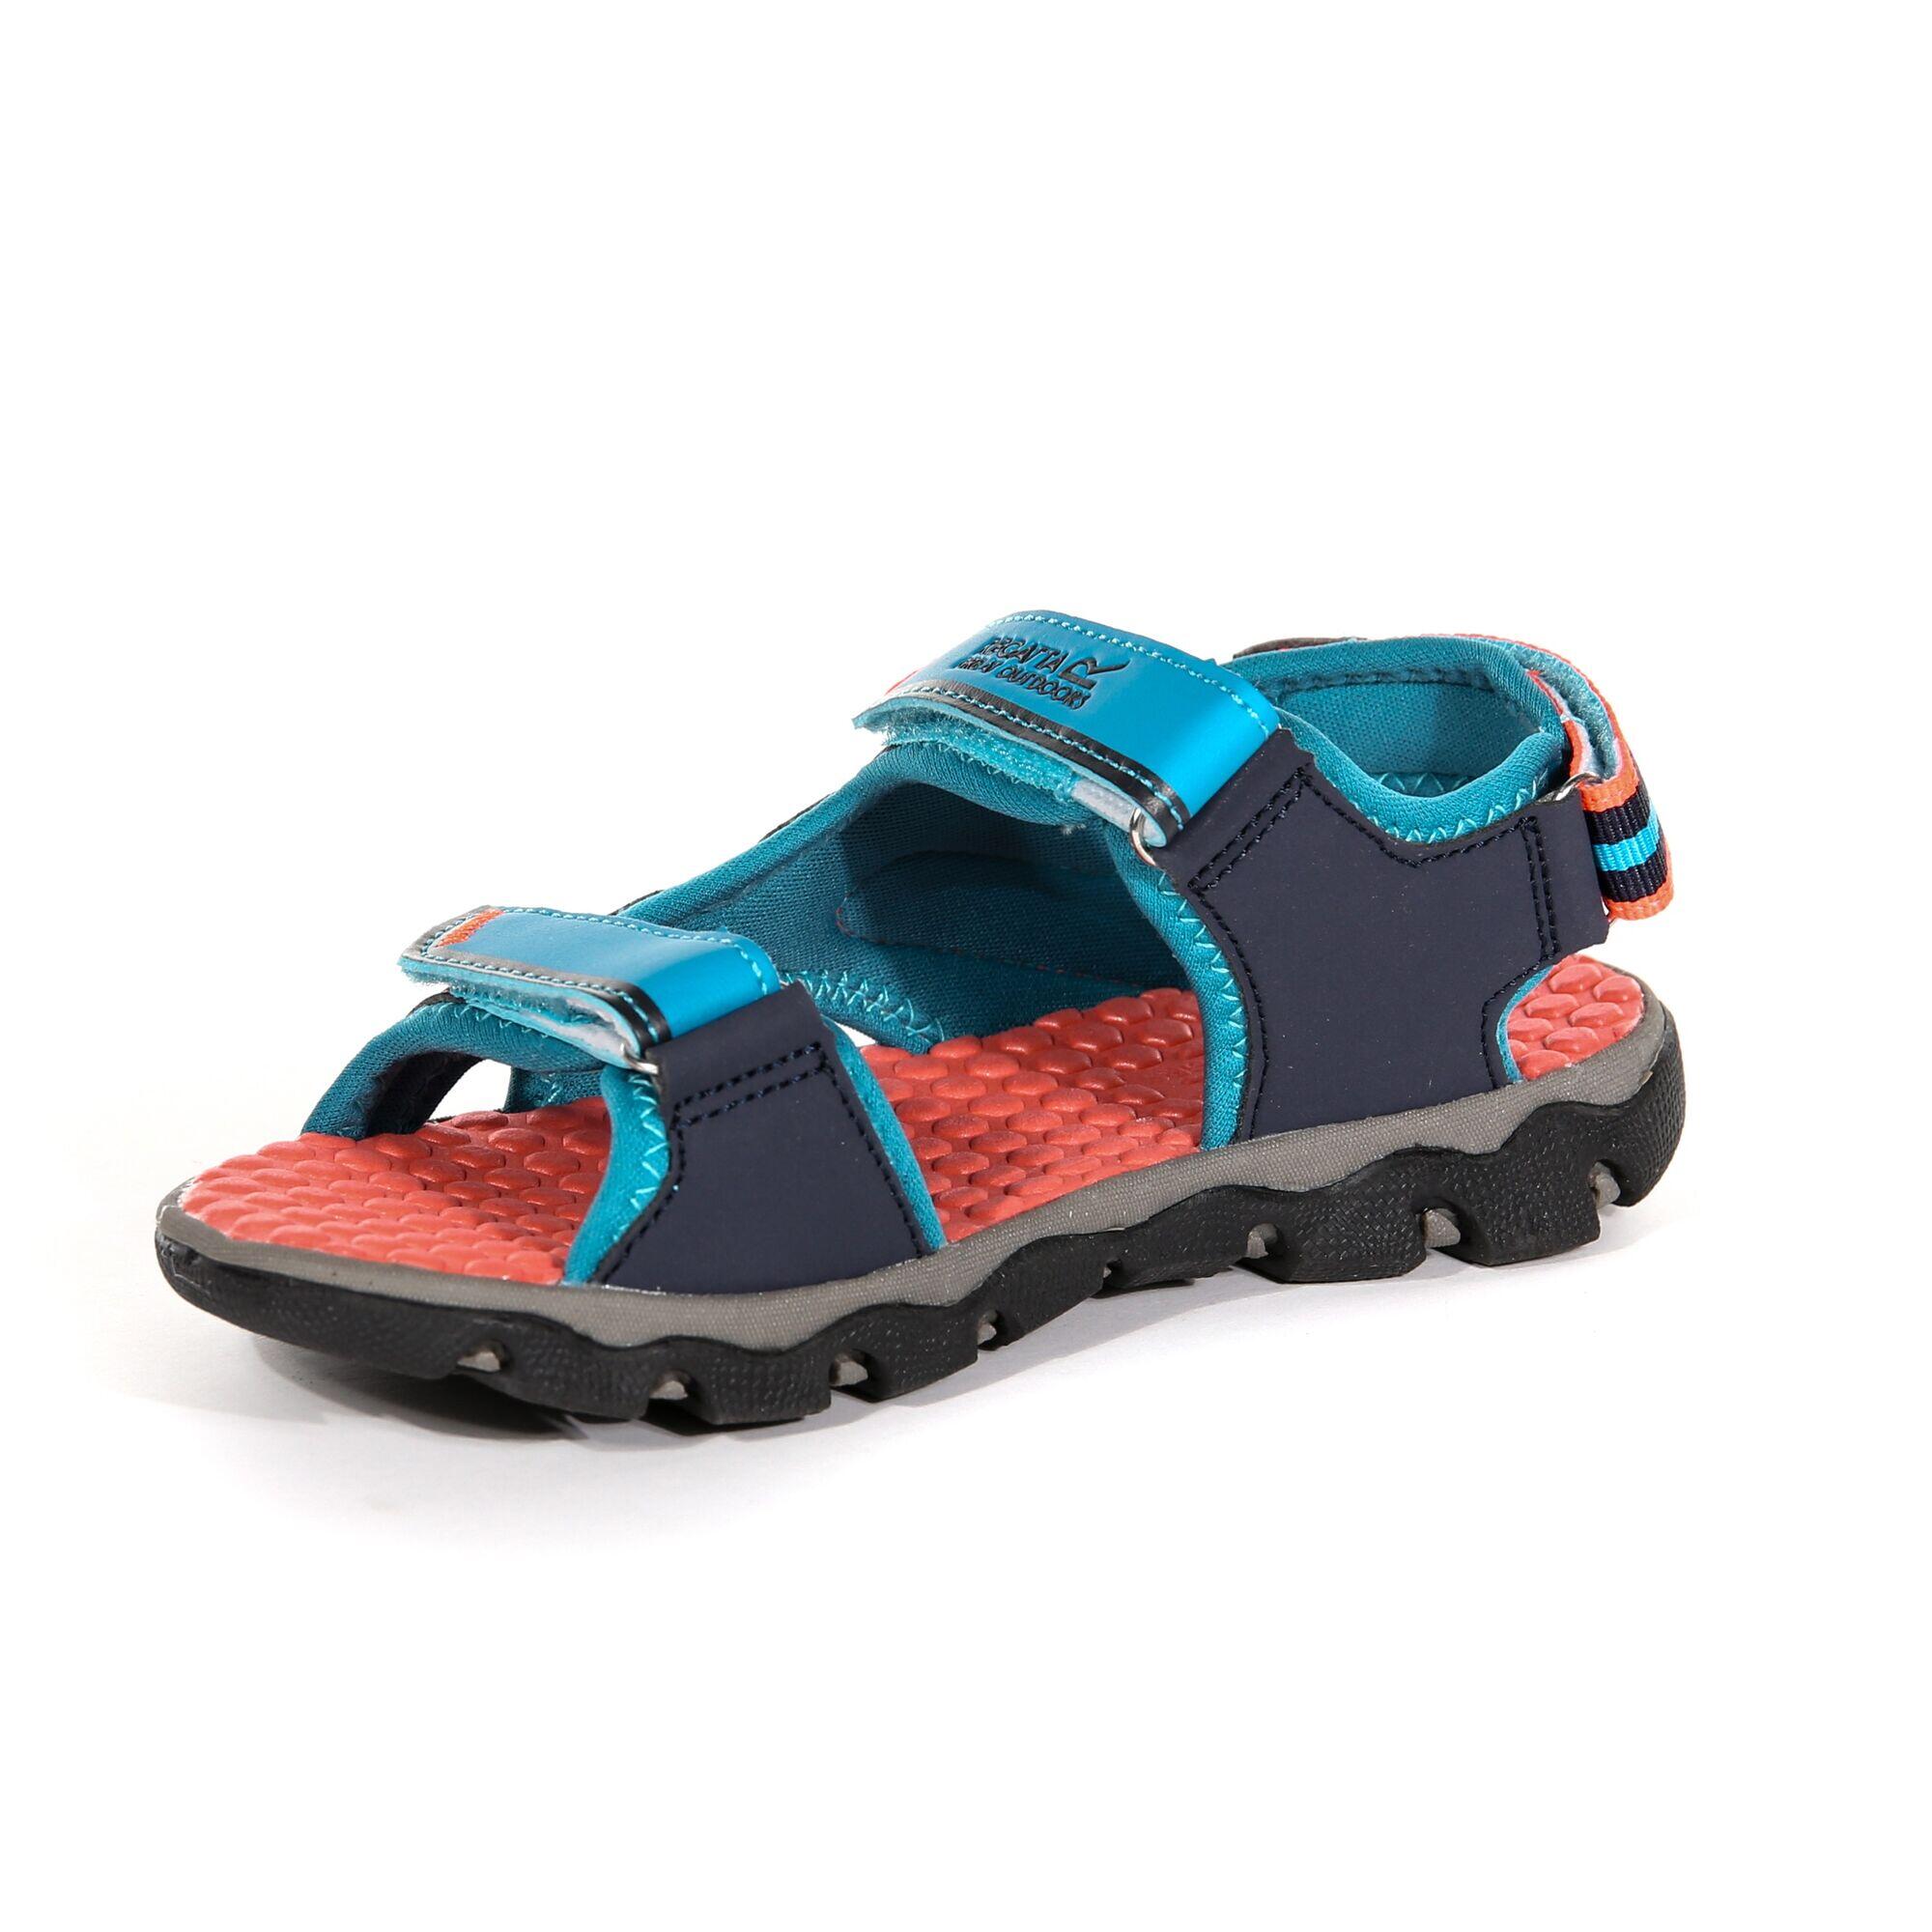 Kota Drift Junior Kids Walking Sandals - Enamel Blue / Pink 4/5